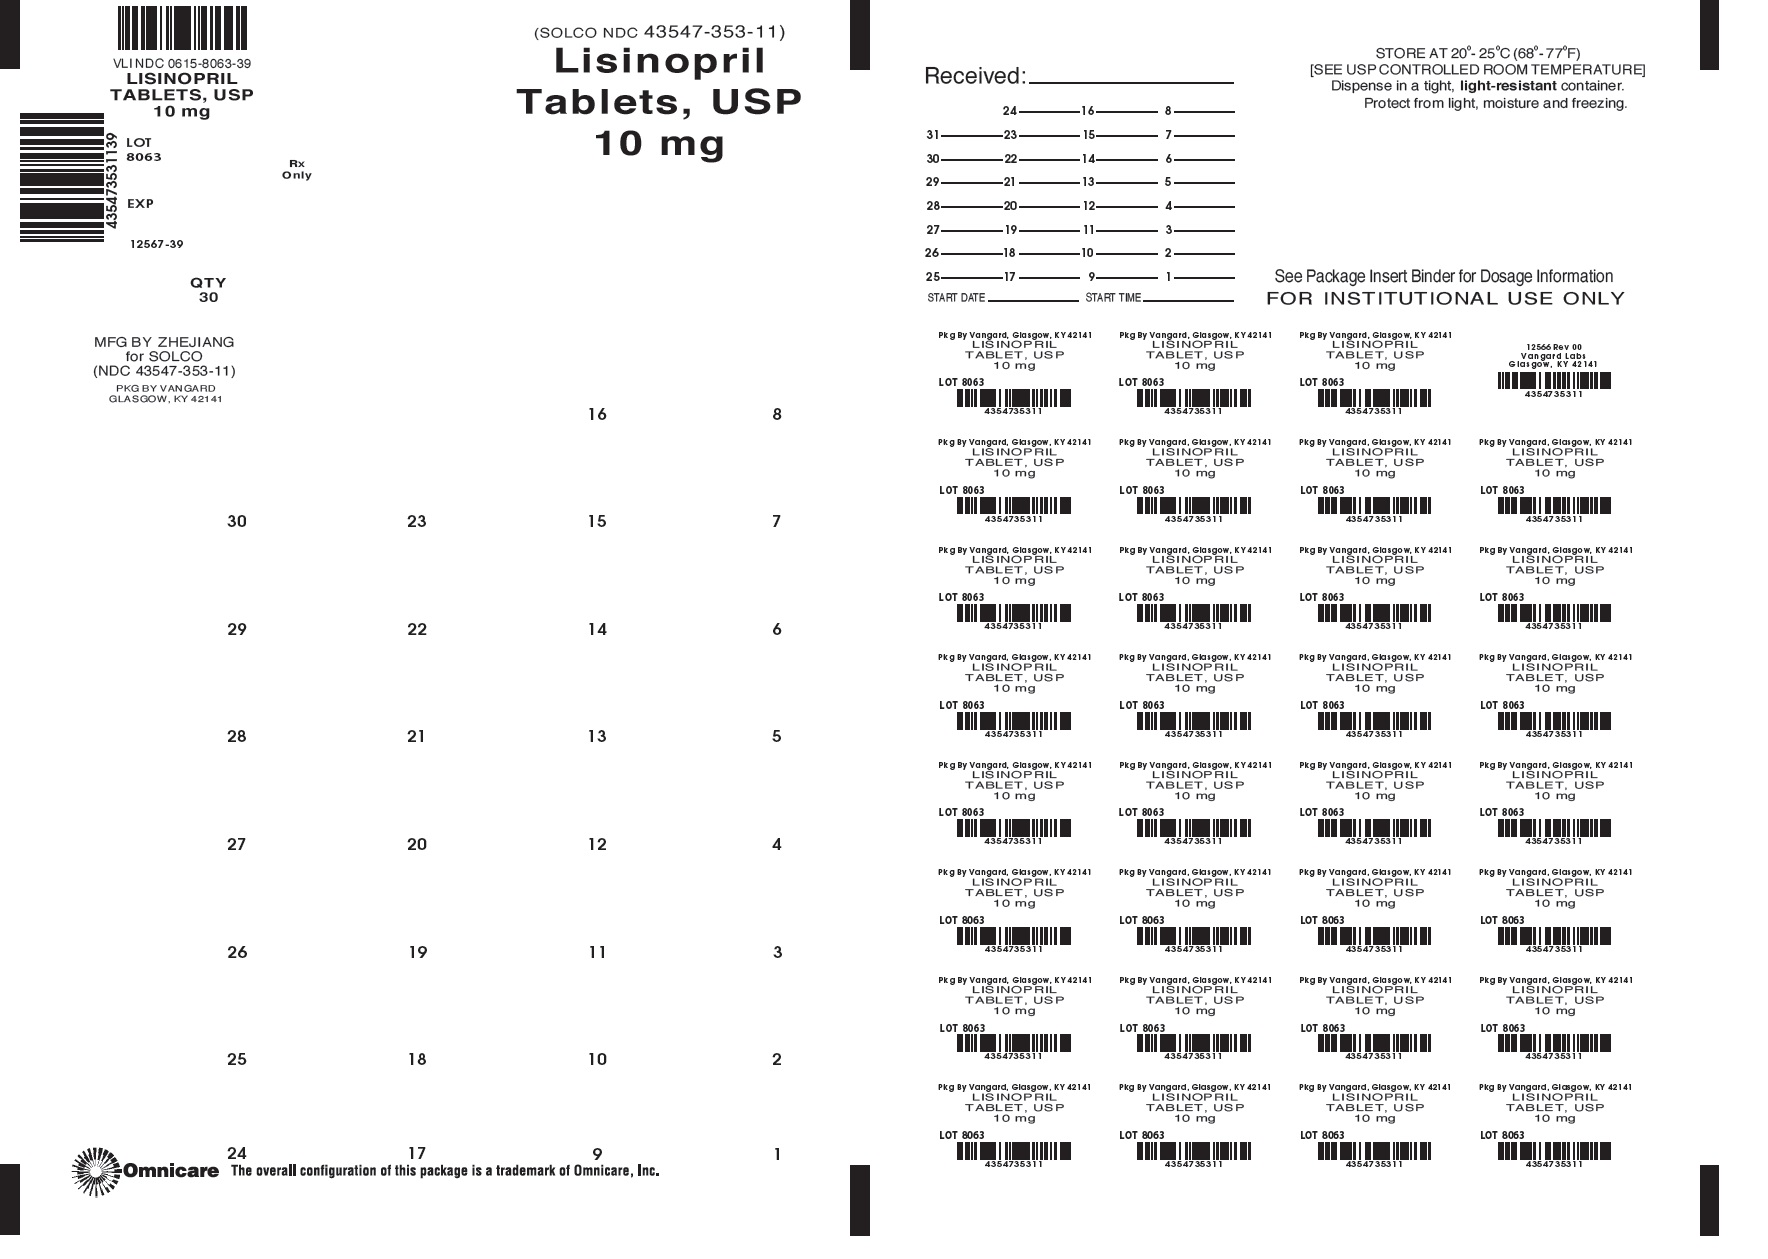 Lisinopril 10mg tablets bingo card label